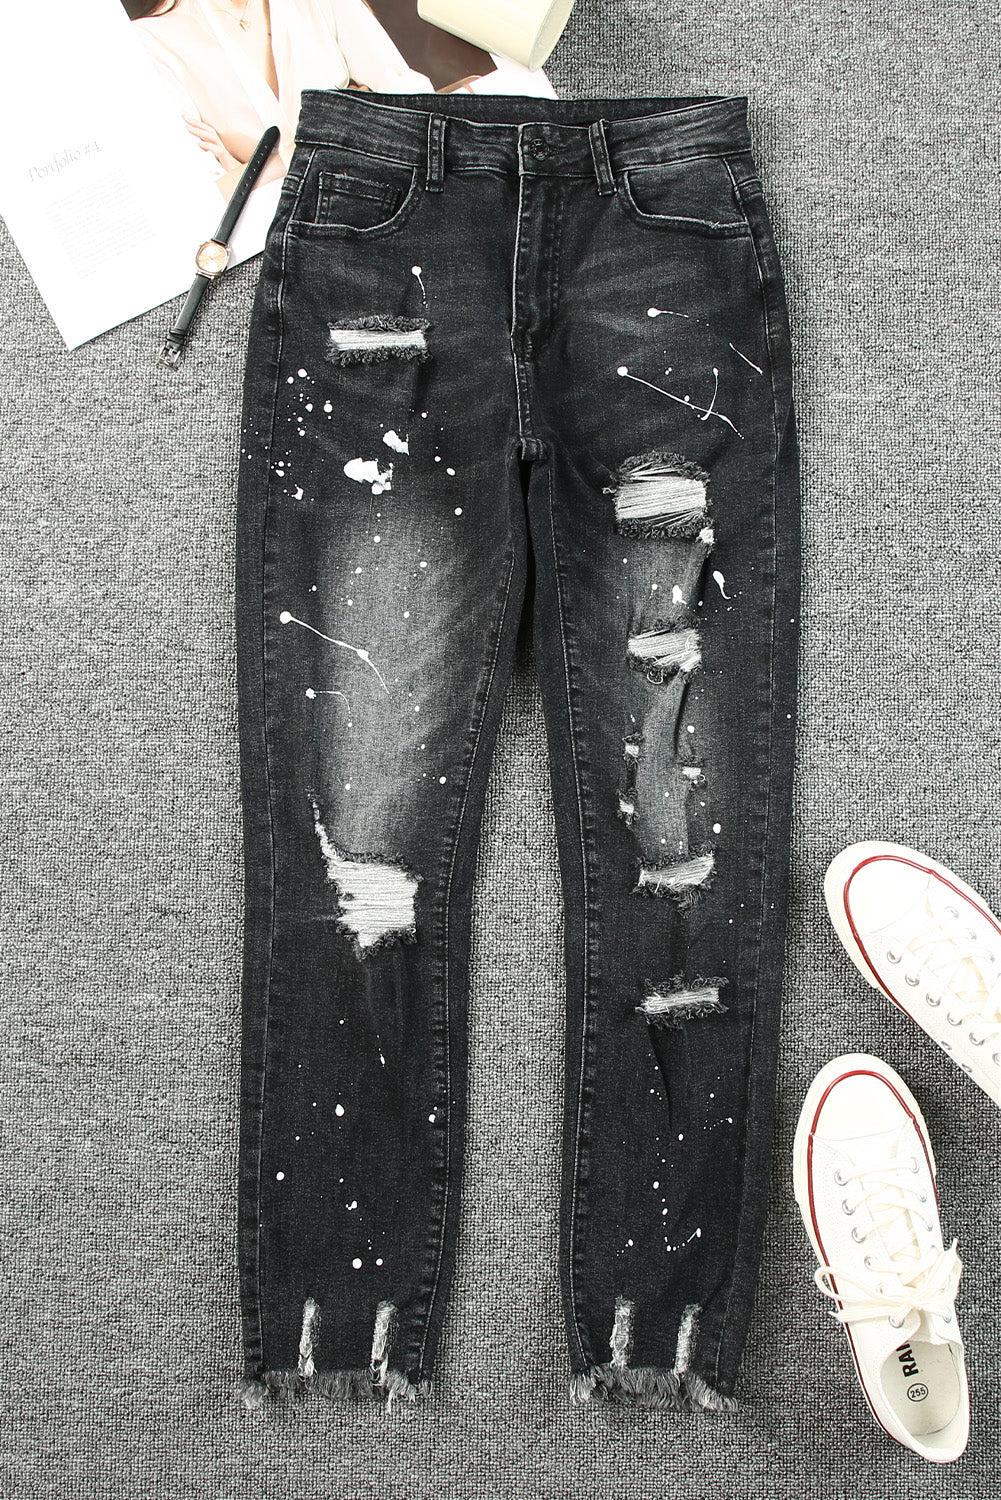 Black Ink Splash Distressed Skinny Jeans